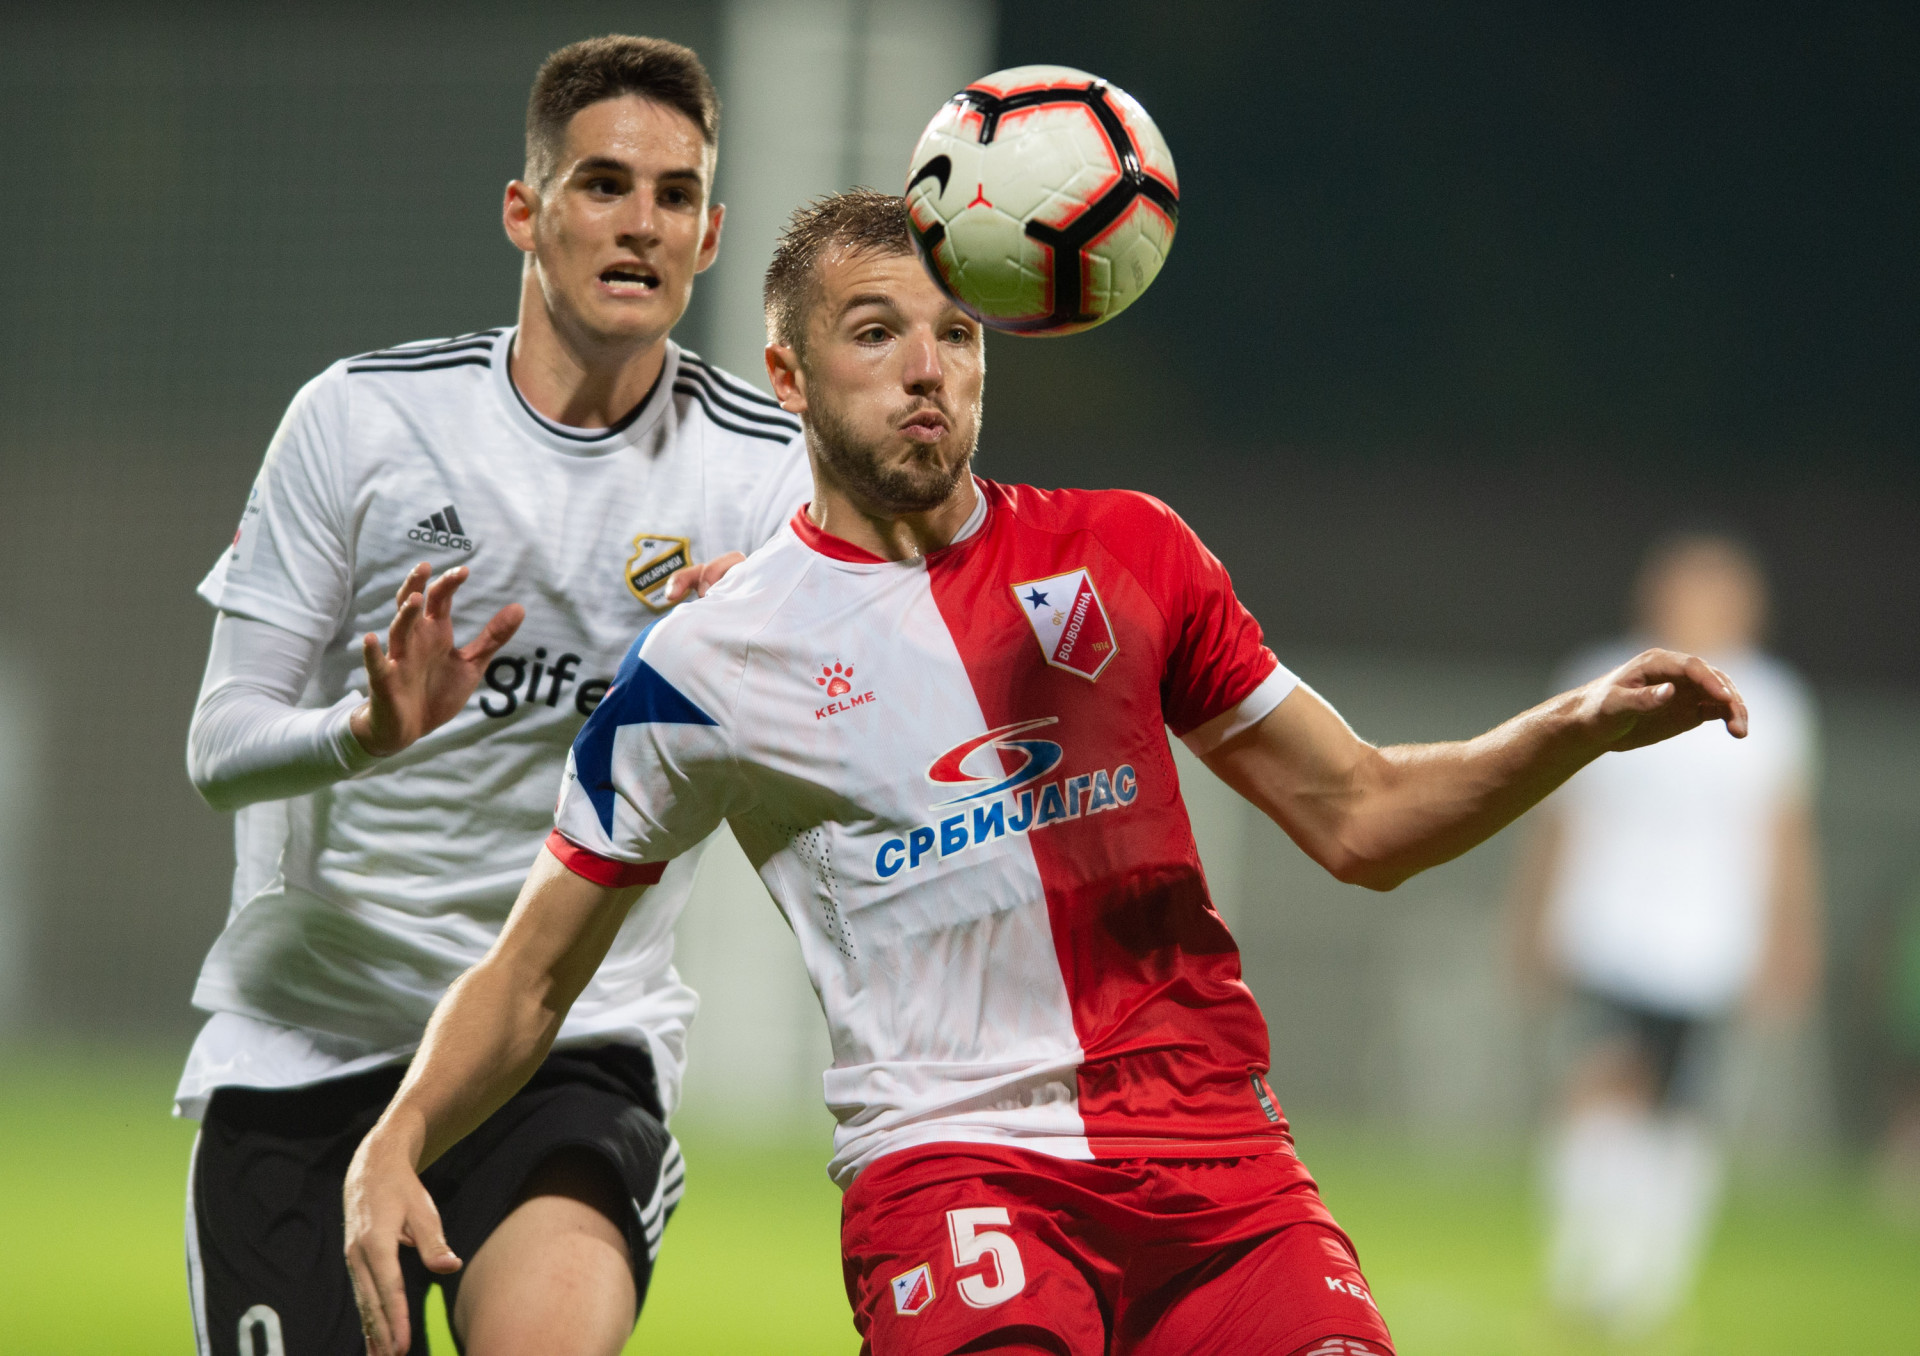 Čukarički - Vojvodina 0:0 - Slobodan Tedić | FkCukaricki